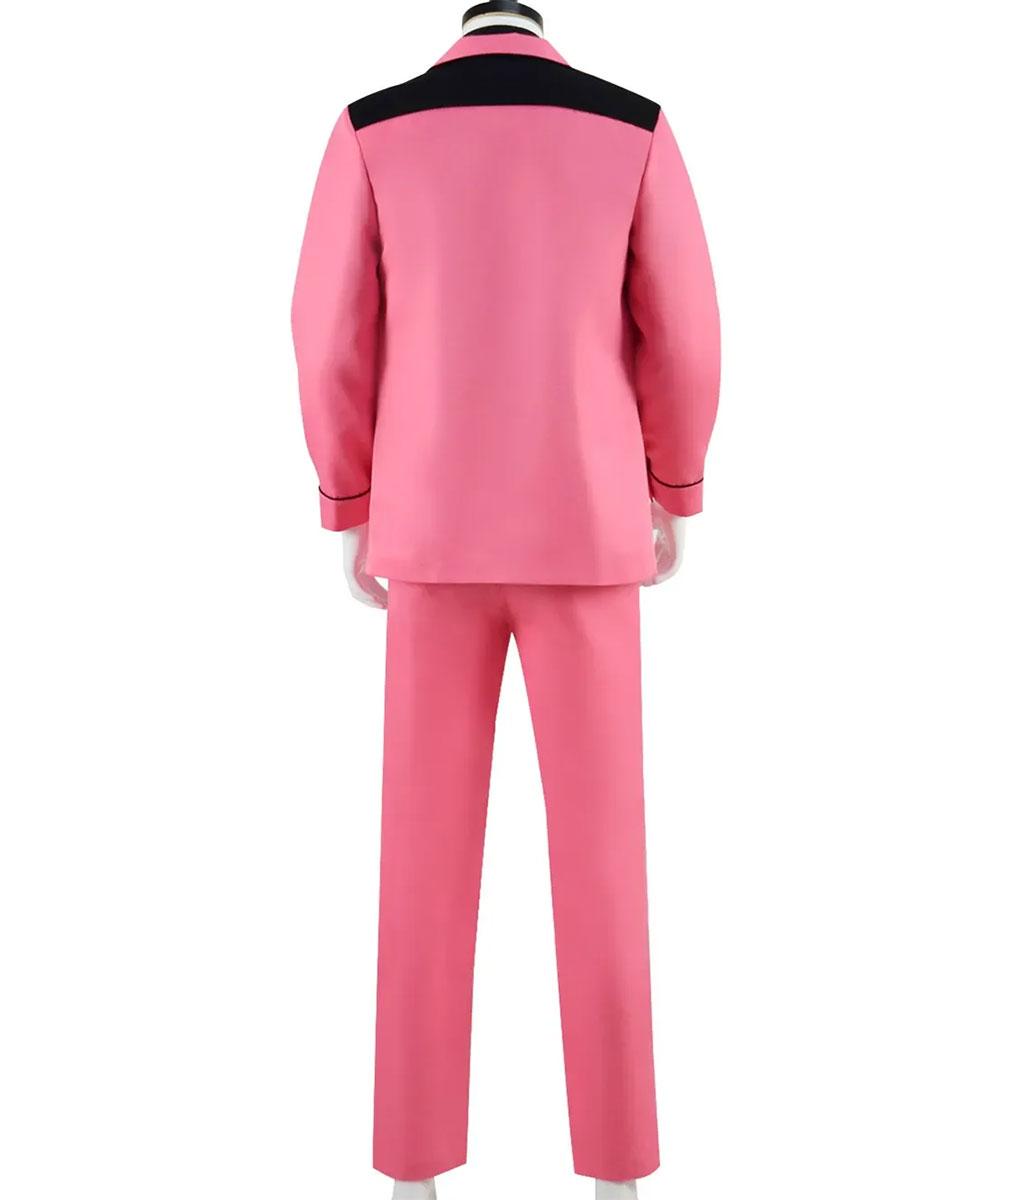 Elvis Presley Austin Butler Pink Suit (4)